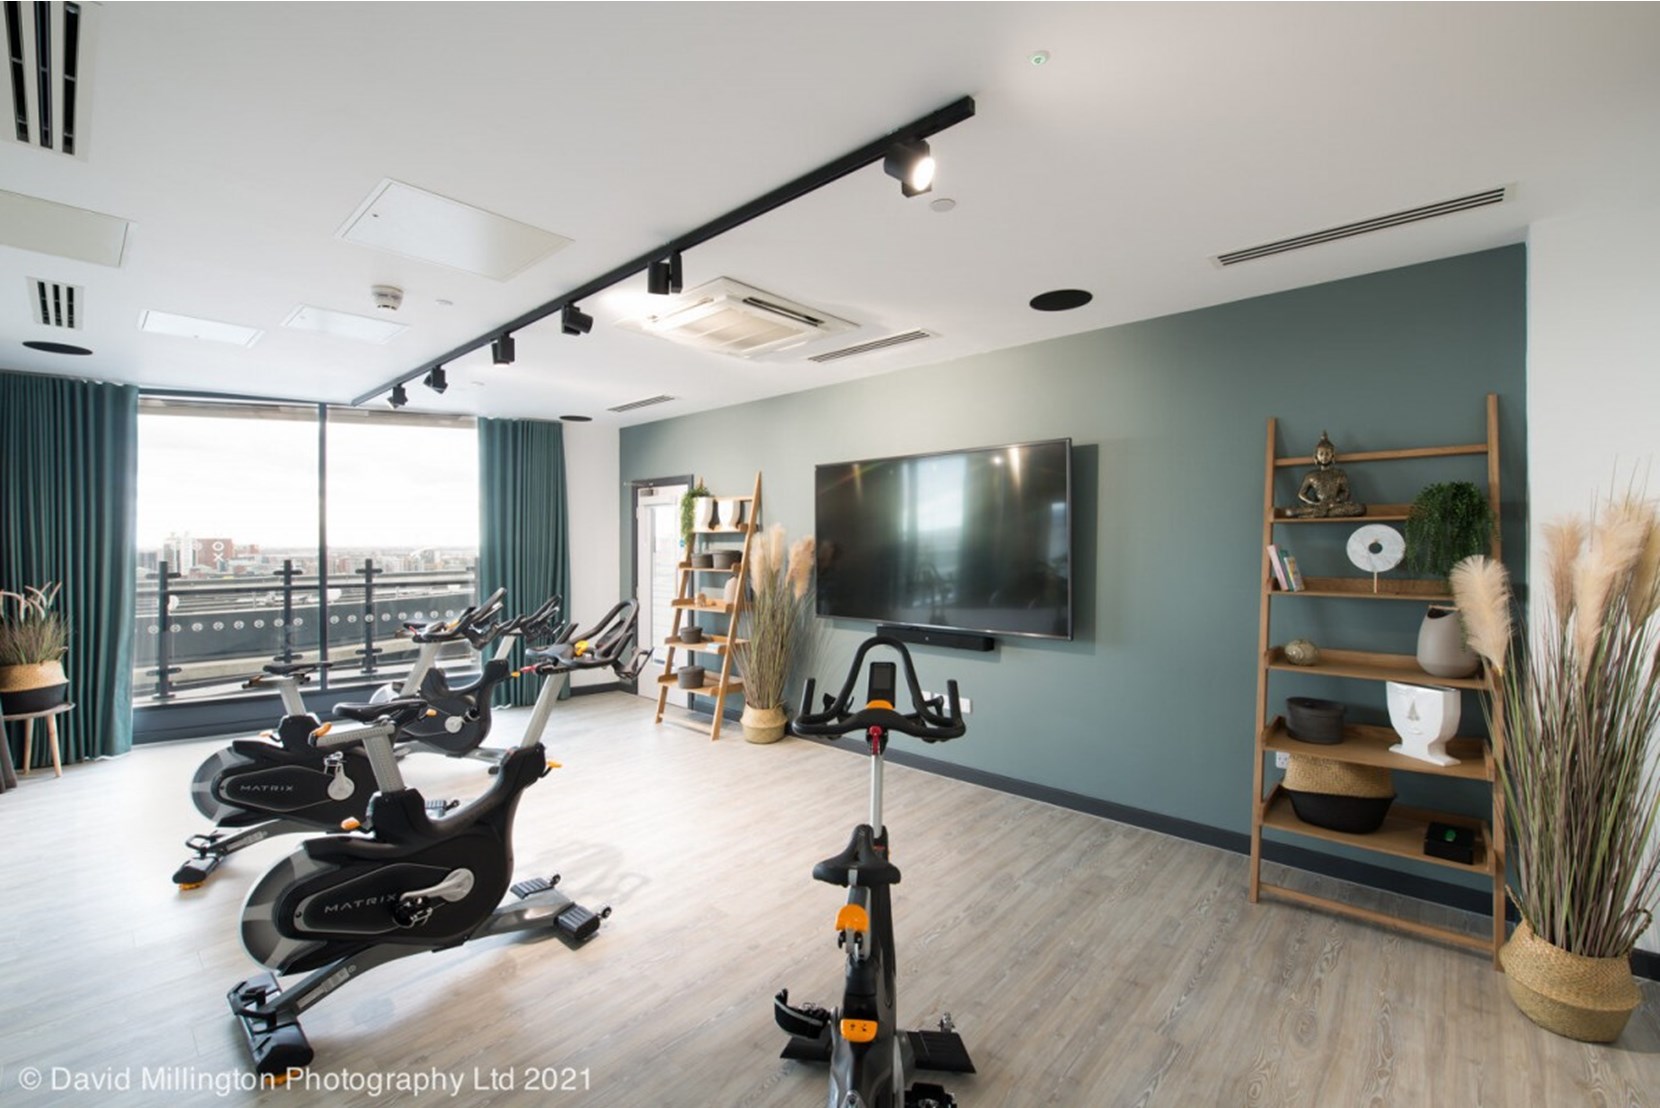 Apartment-Allsop-Vox-Manchester-interior-gym